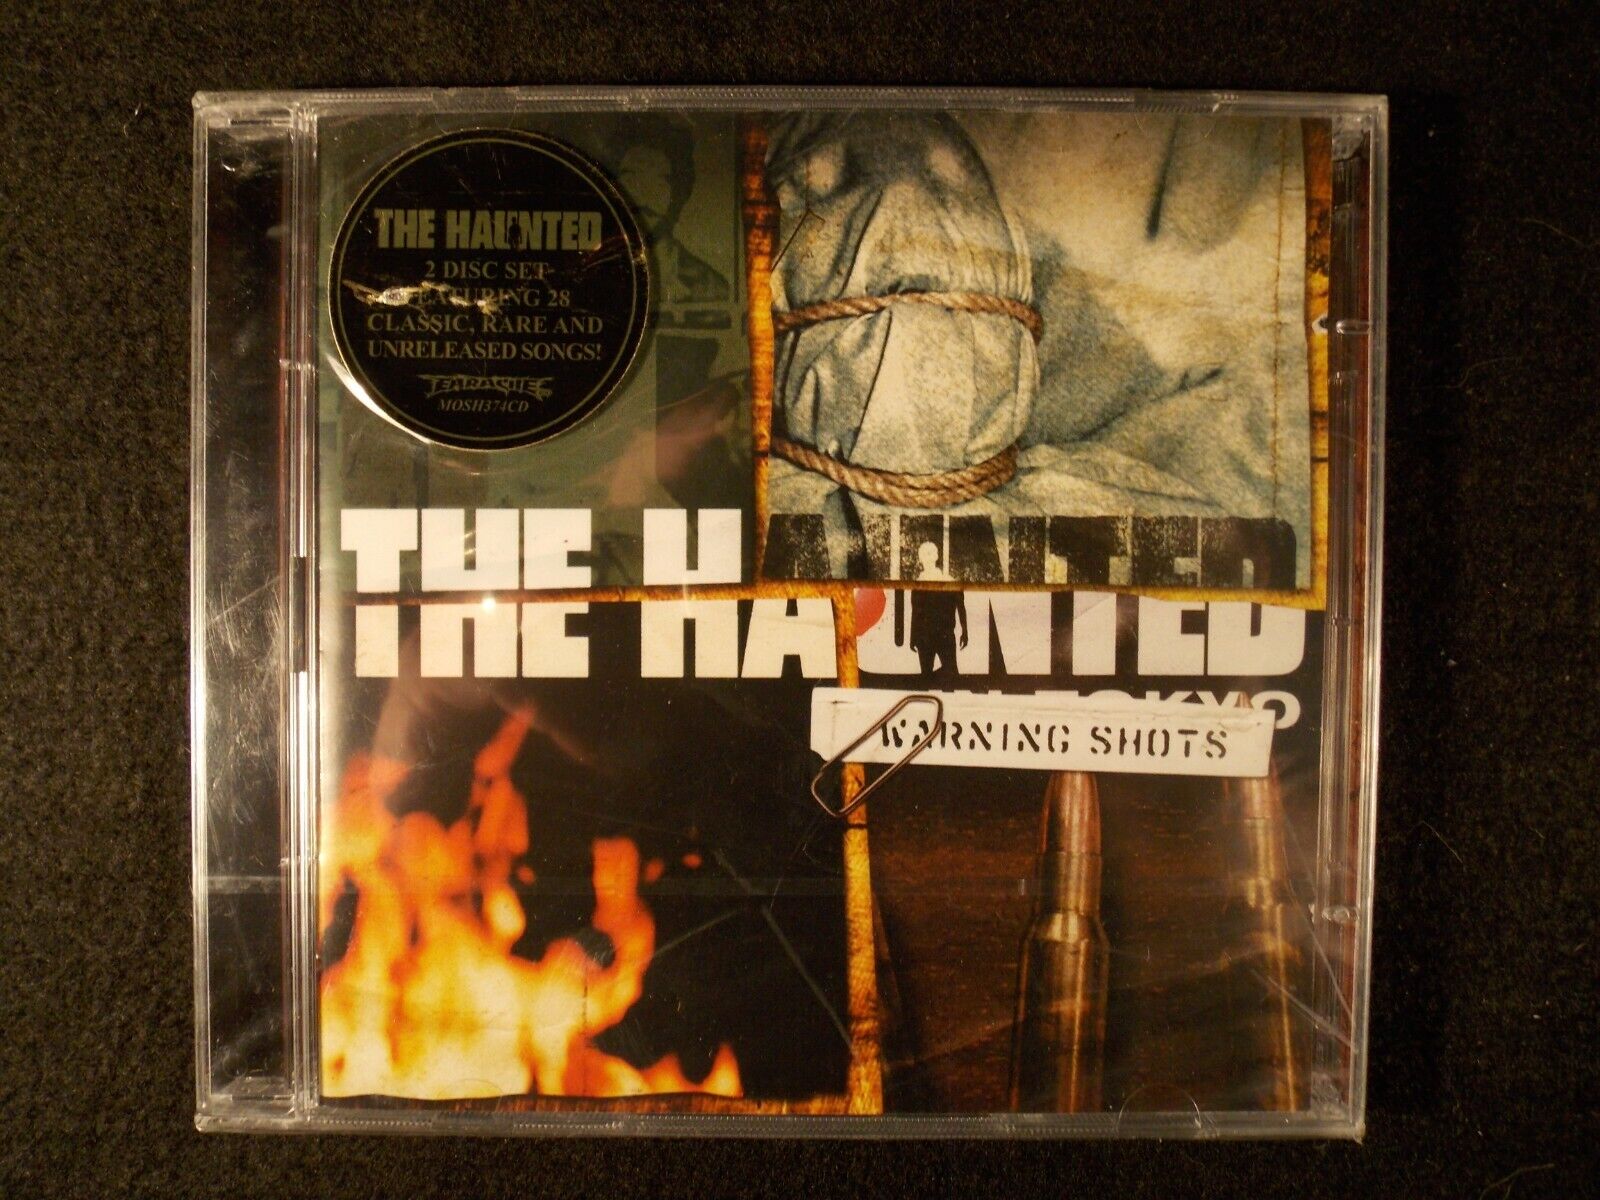 Warning Shots by The Haunted (CD, 2009, Earache) NEW!